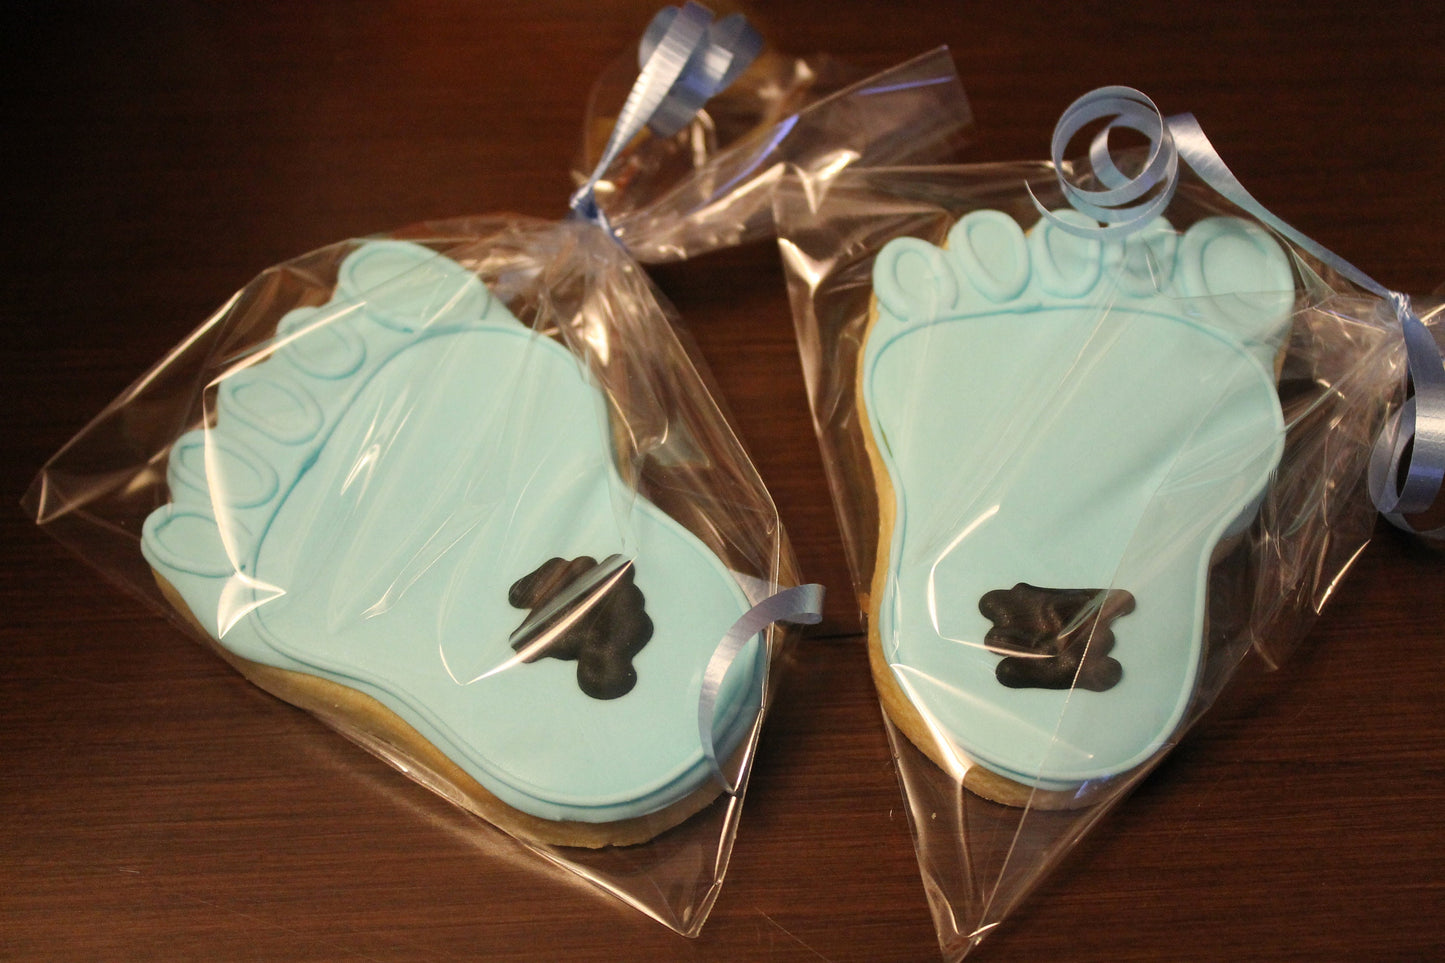 Tar heels cookies One Dozen (12) - Ladybug bake shop